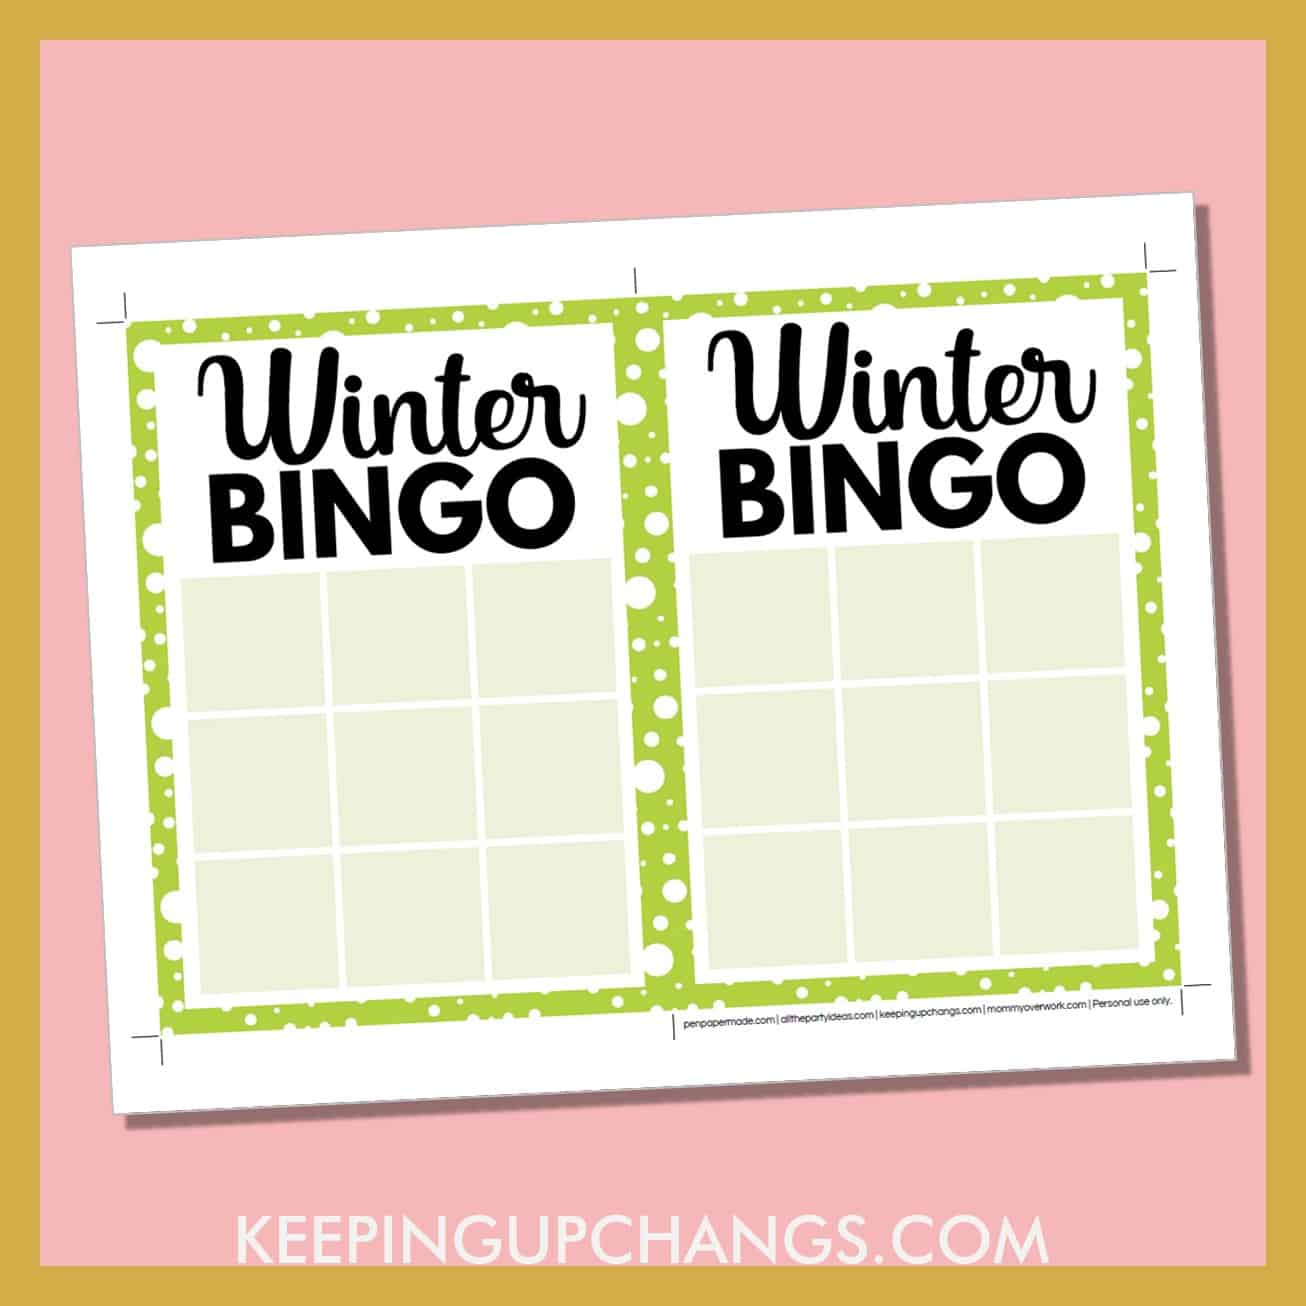 free winter christmas bingo 3x3 grid game board blank template.